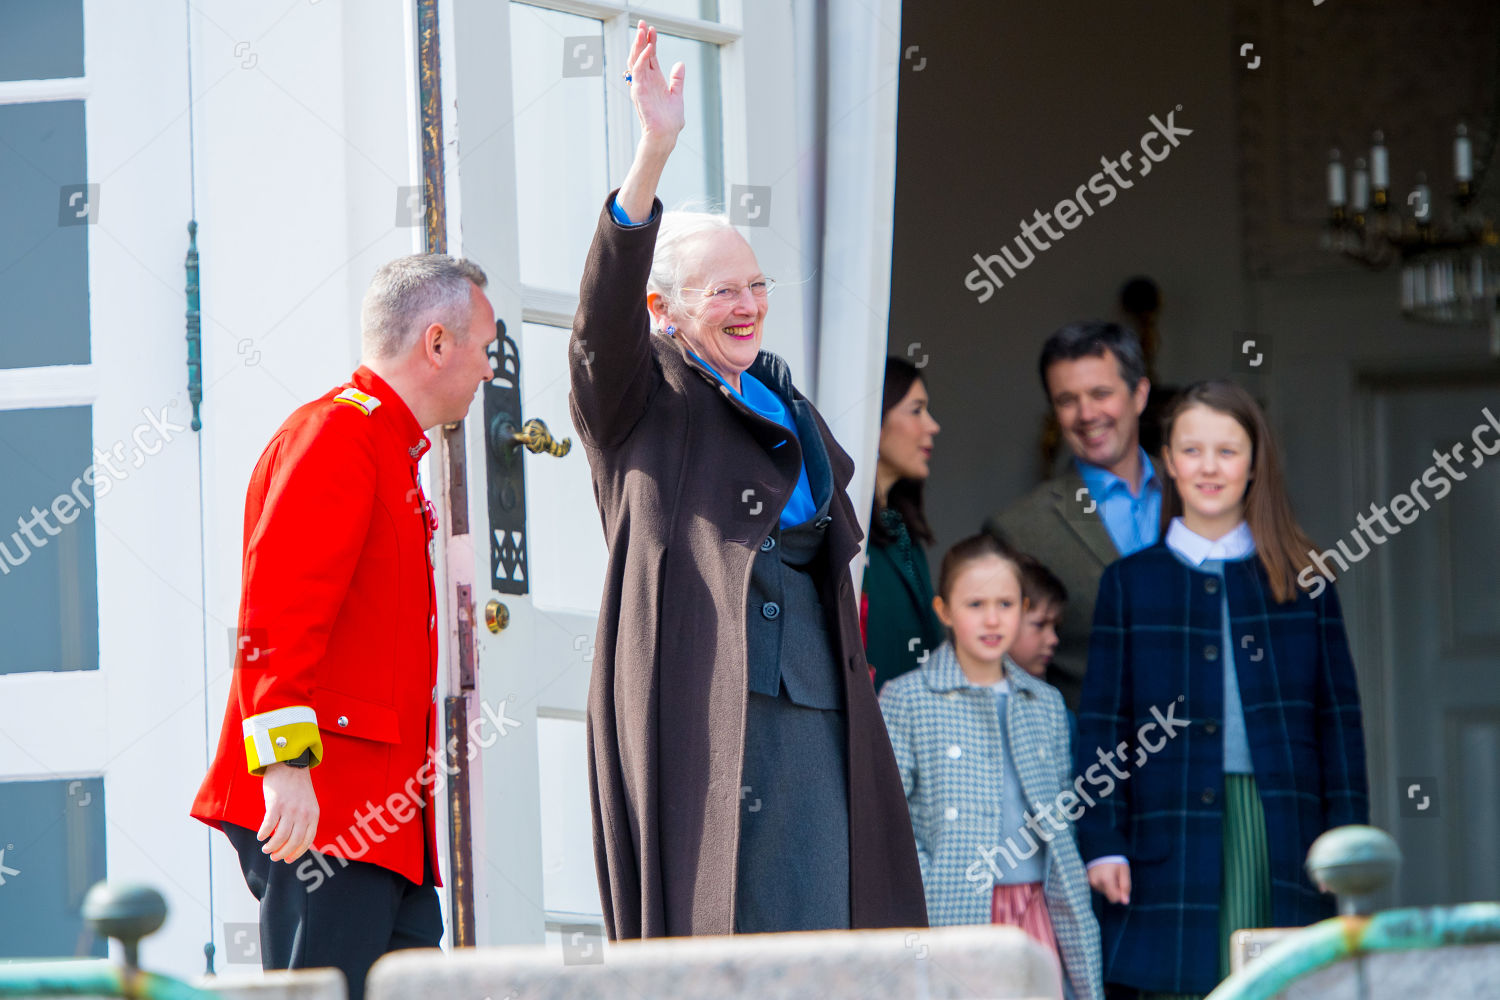 queen-margarethe-79th-birthday-celebrations-marselisborg-palace-aarhus-denmark-shutterstock-editorial-10208289am.jpg